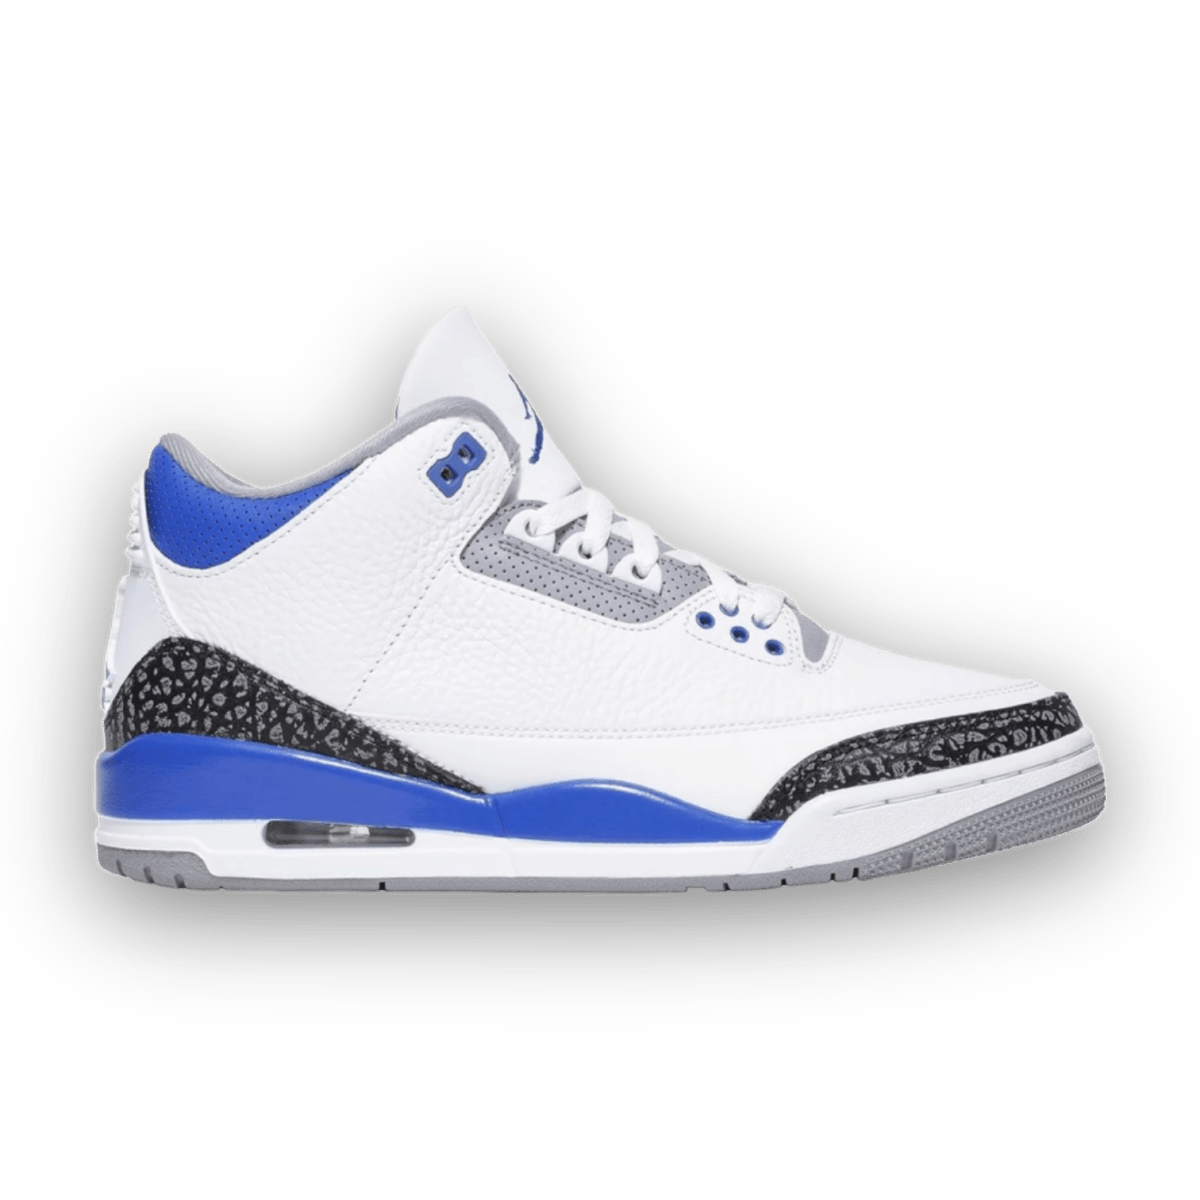 Air Jordan 3 Retro 'Racer Blue' - sneaker - Mid Sneaker - Jordan - Jawns on Fire